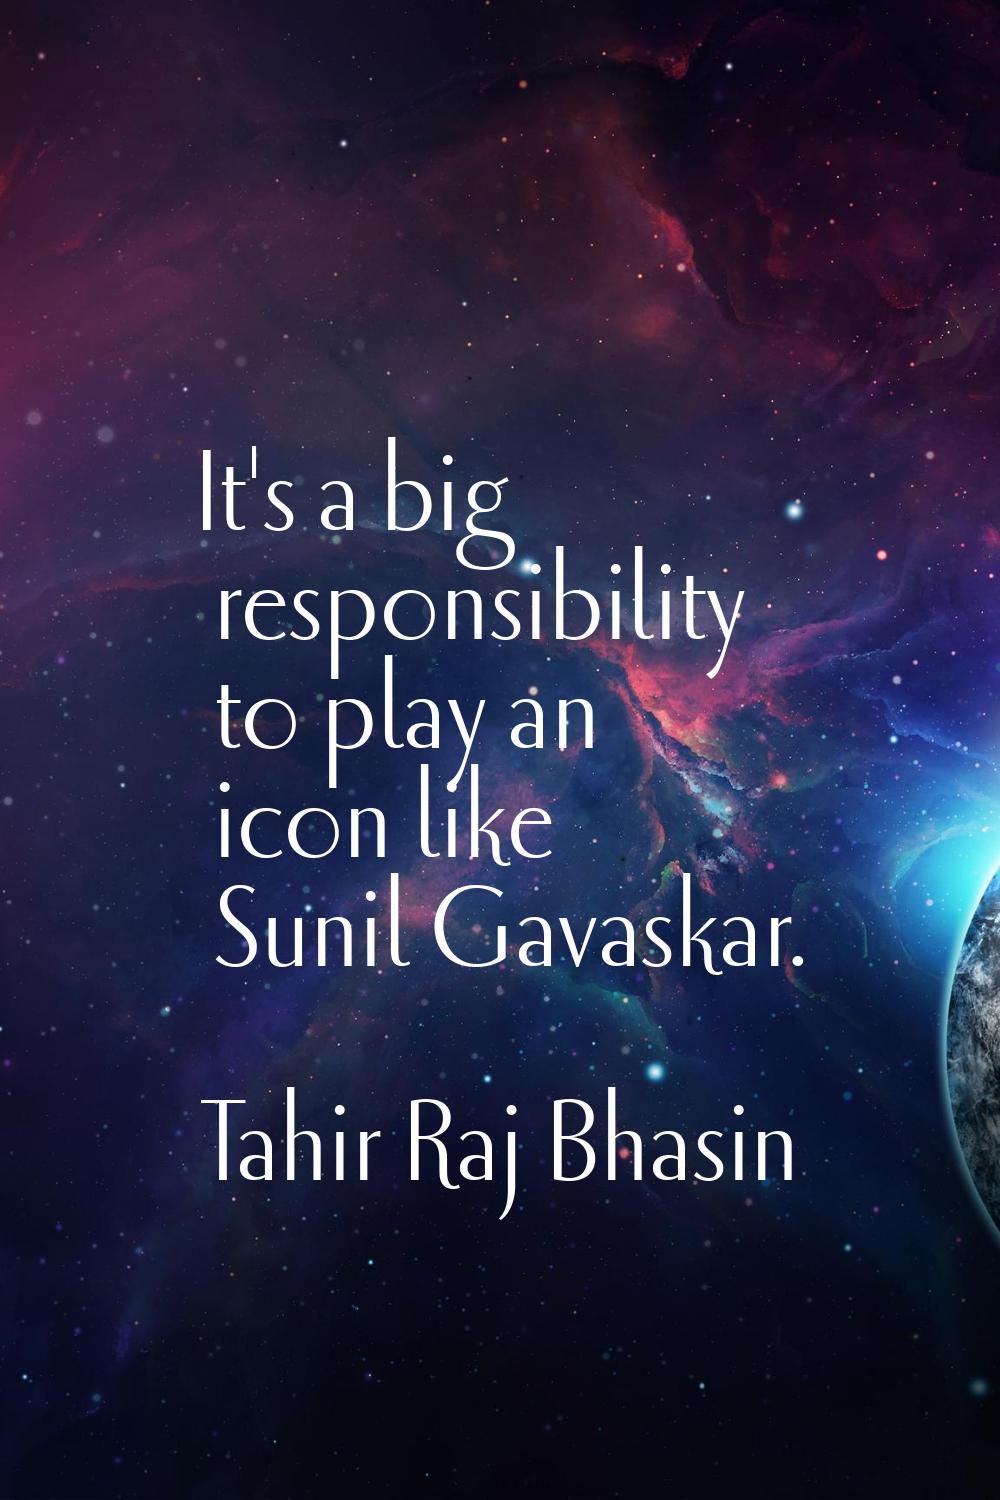 It's a big responsibility to play an icon like Sunil Gavaskar.